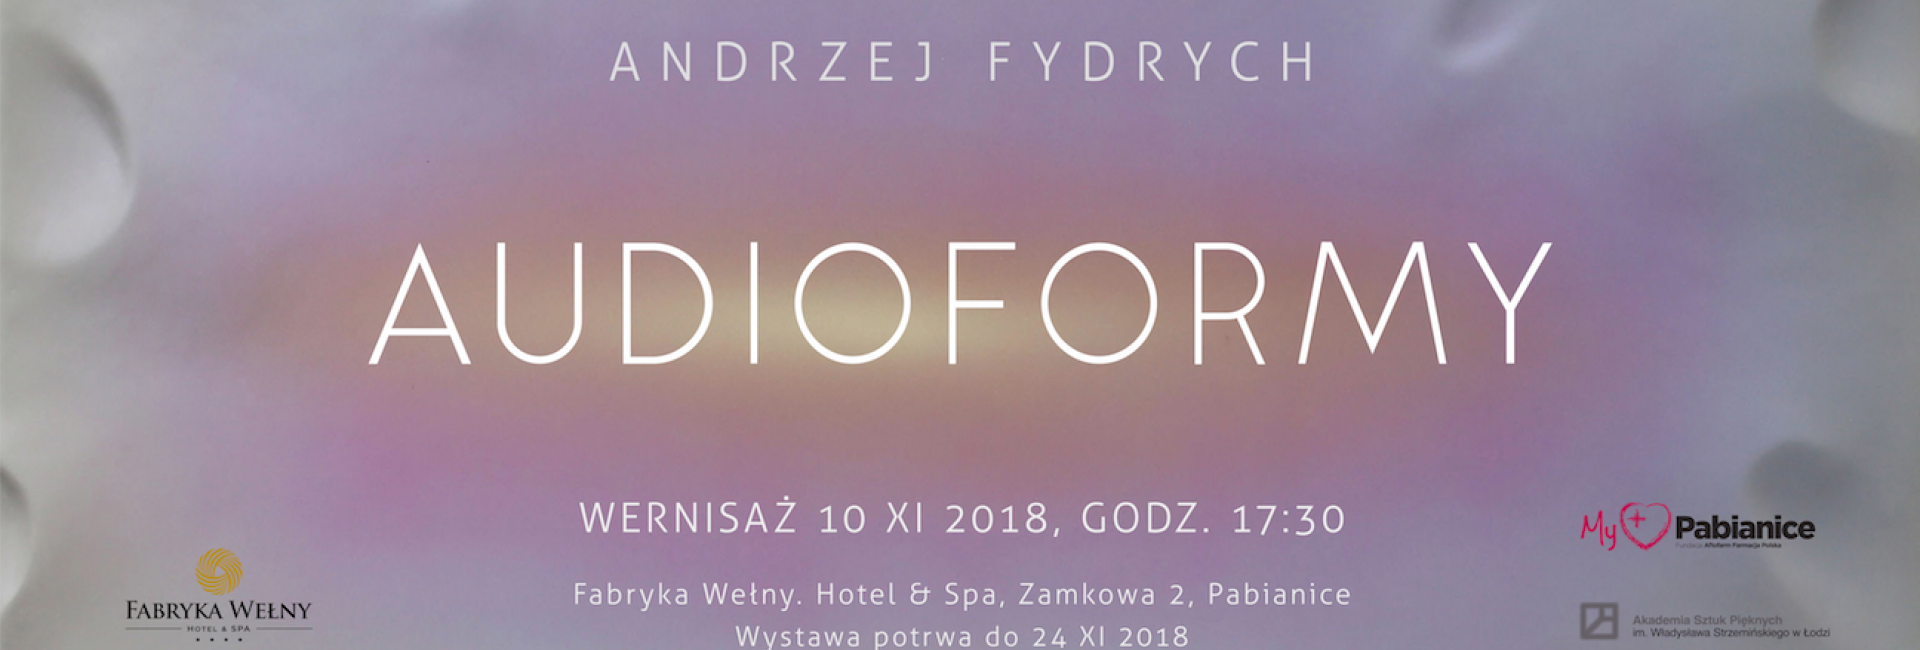 Audioformy Andrzeja Fydrycha